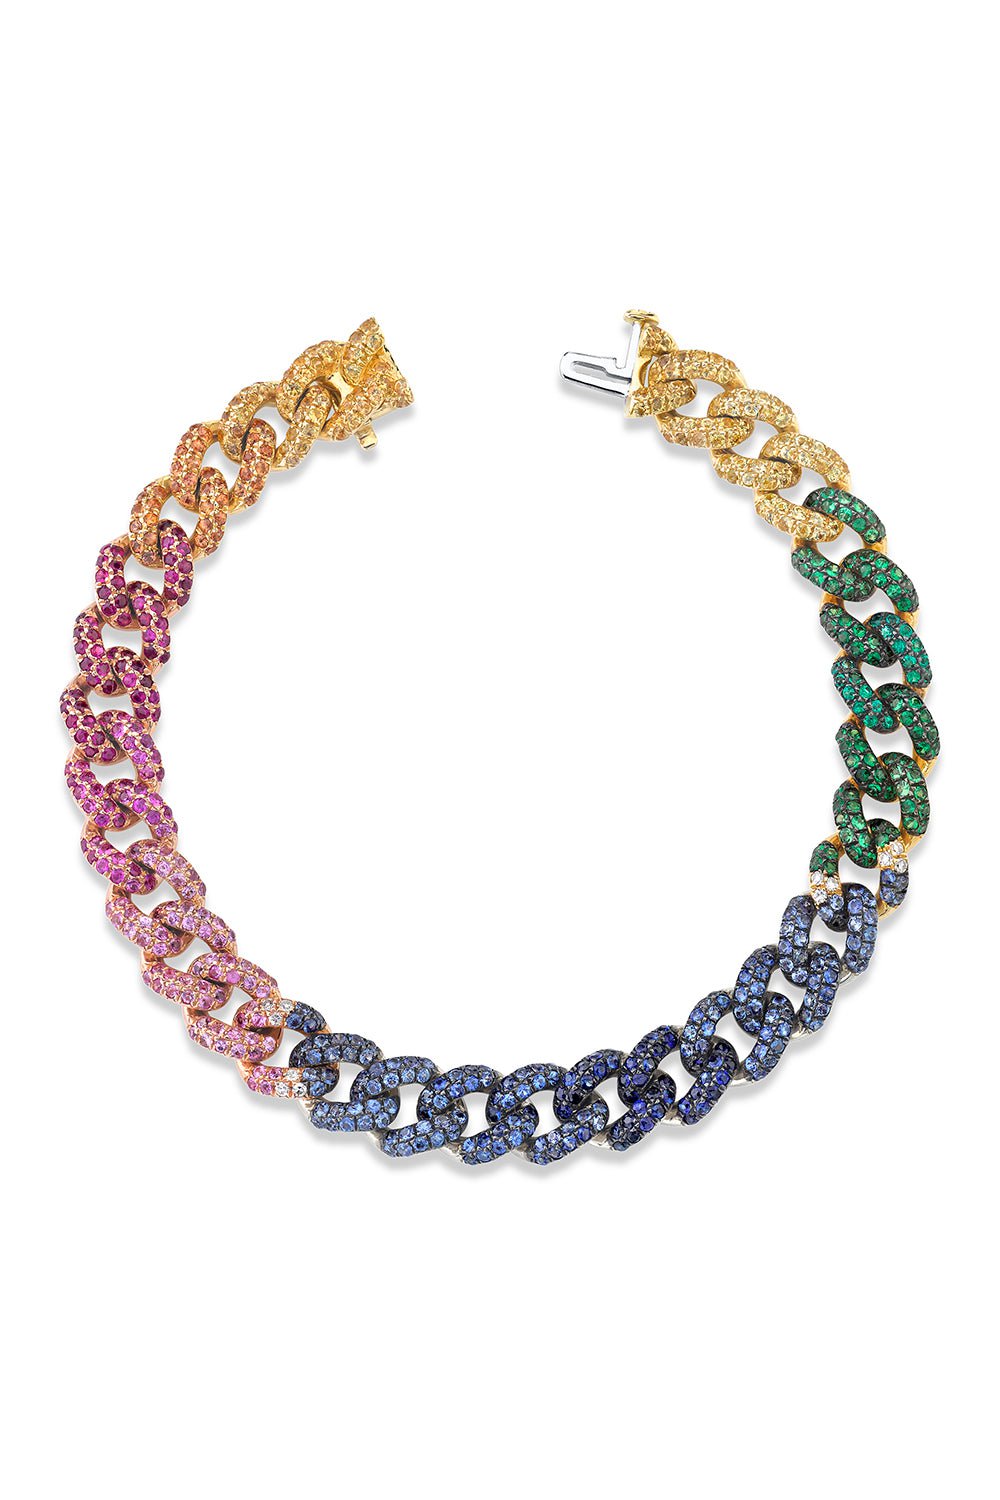 SHAY JEWELRY-Medium Rainbow Pave Link Bracelet-YELLOW GOLD